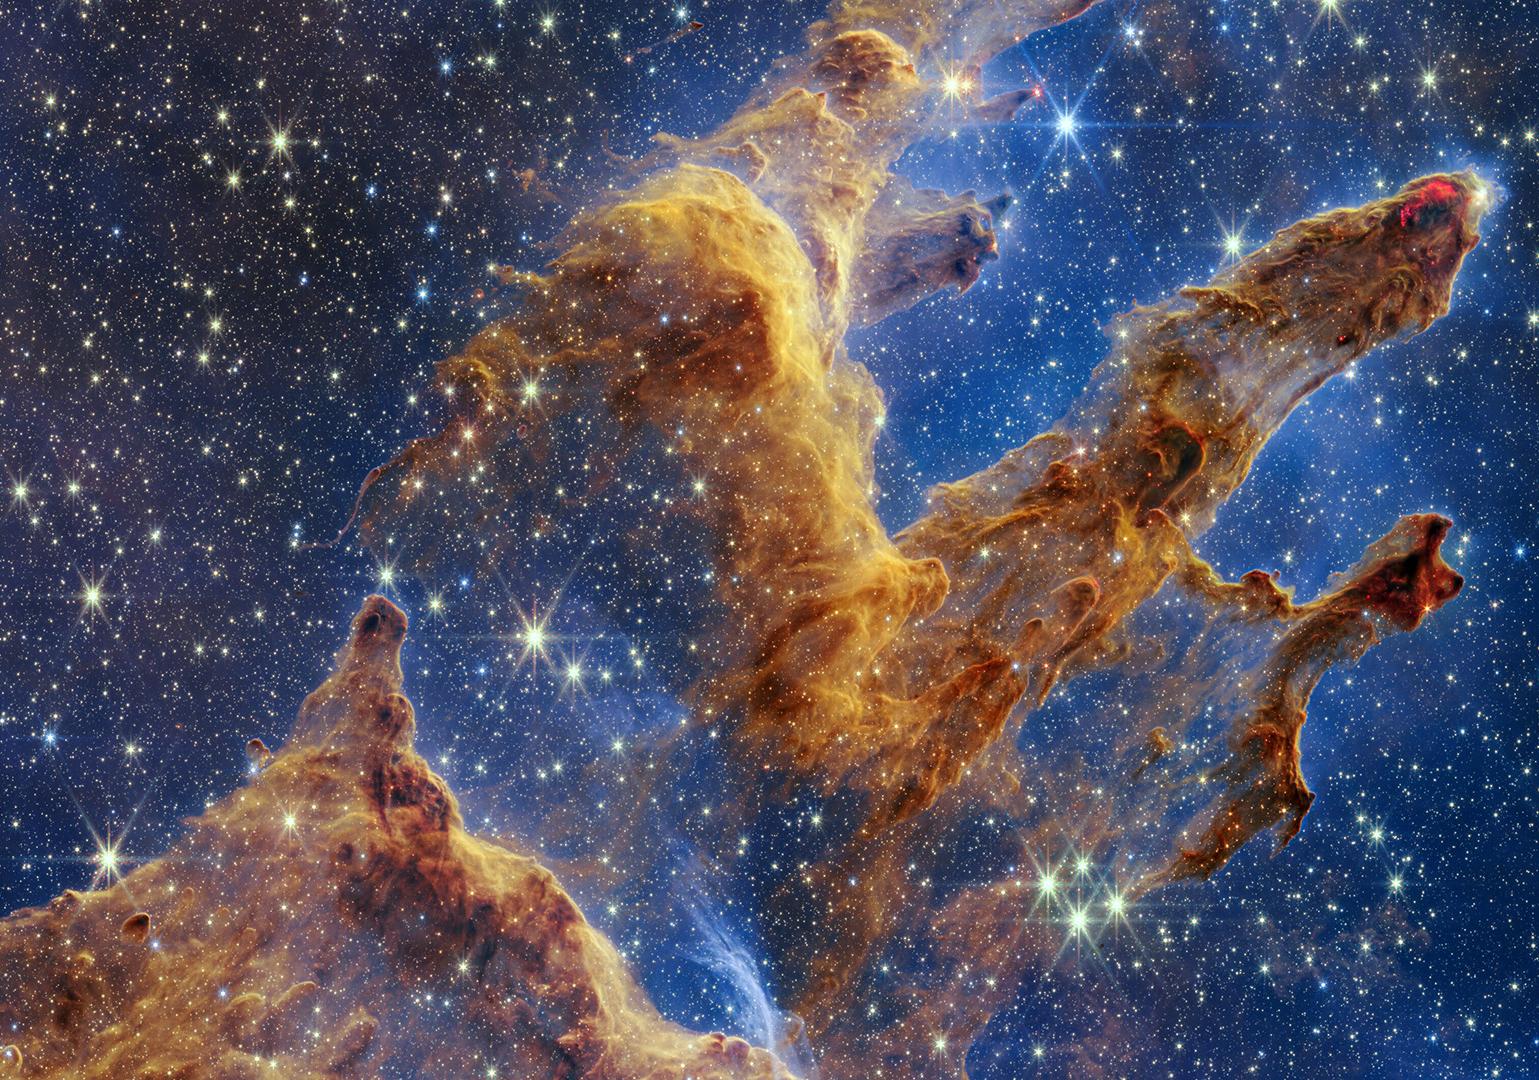 Pillars of Creation Image from James Webb Space Telescope Courtesy NASA